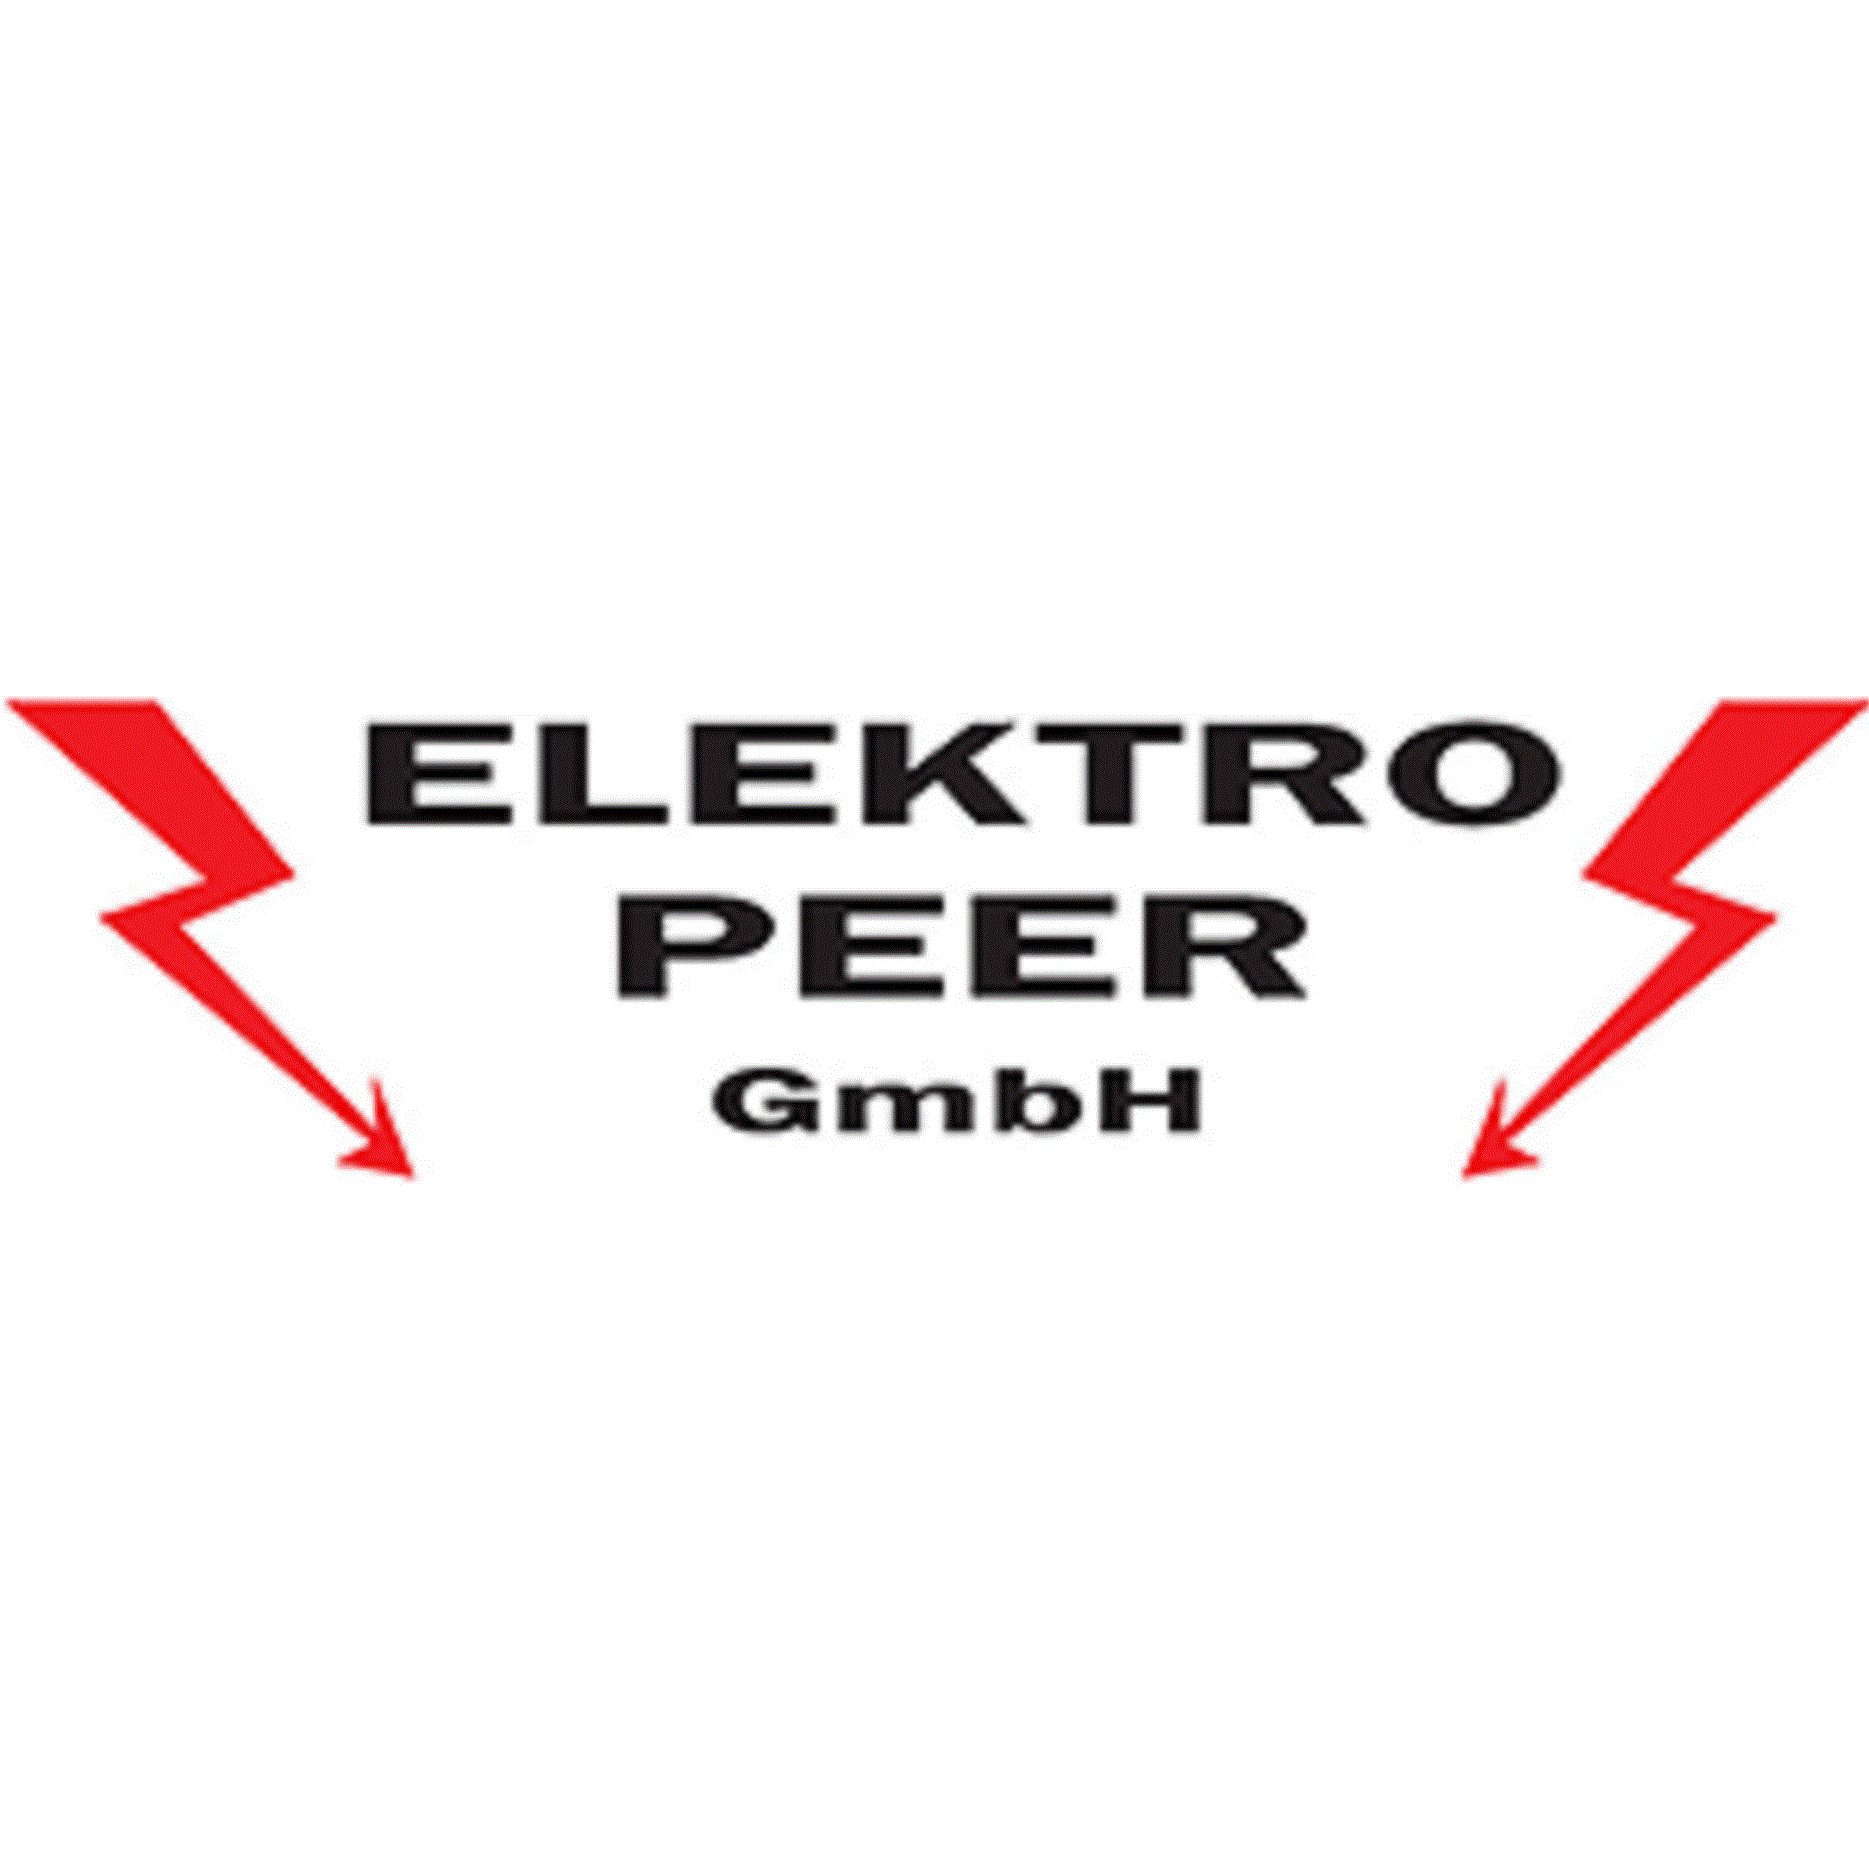 ELEKTRO PEER GmbH